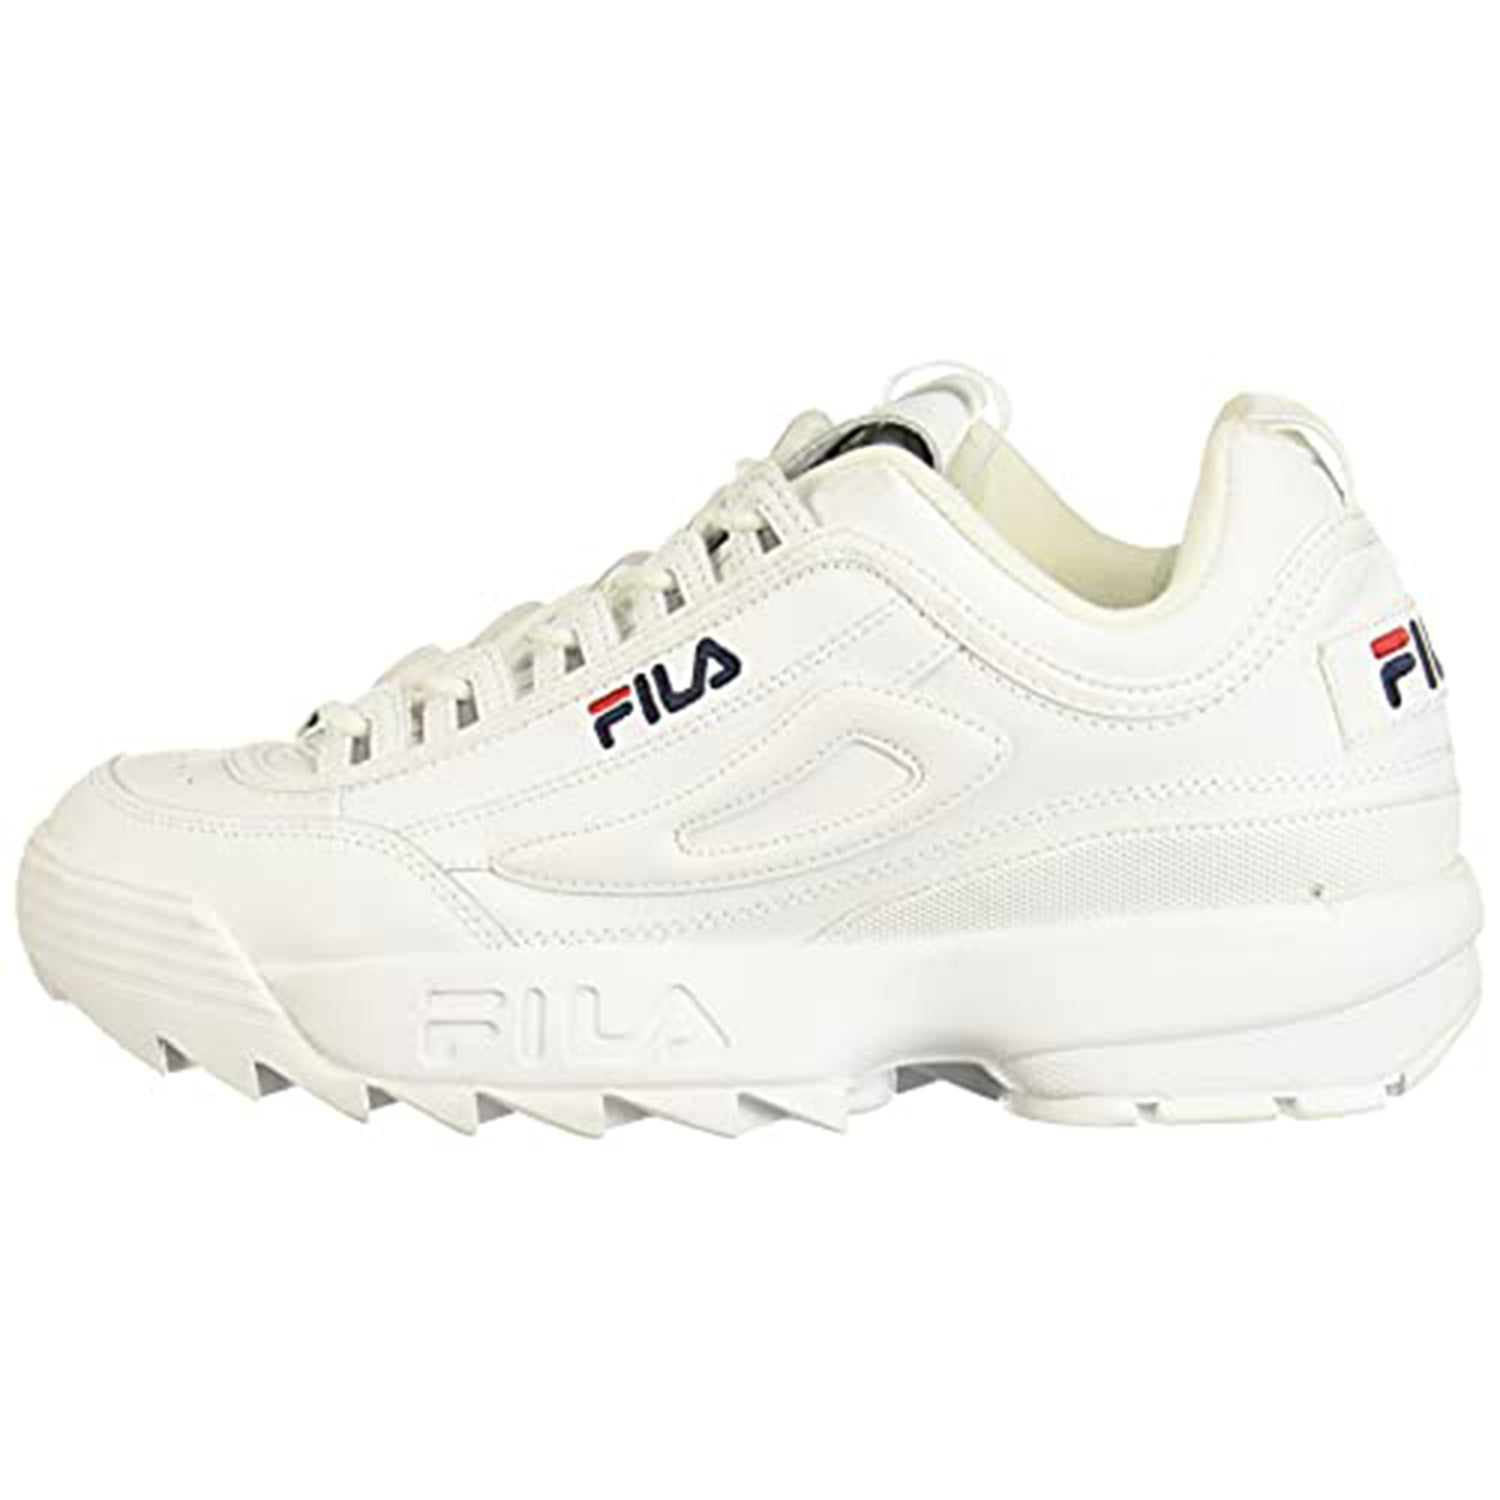 Fila Disruptor II Premium Talla 10 - 1FM00139 125 Blanco – Sneaker Binge